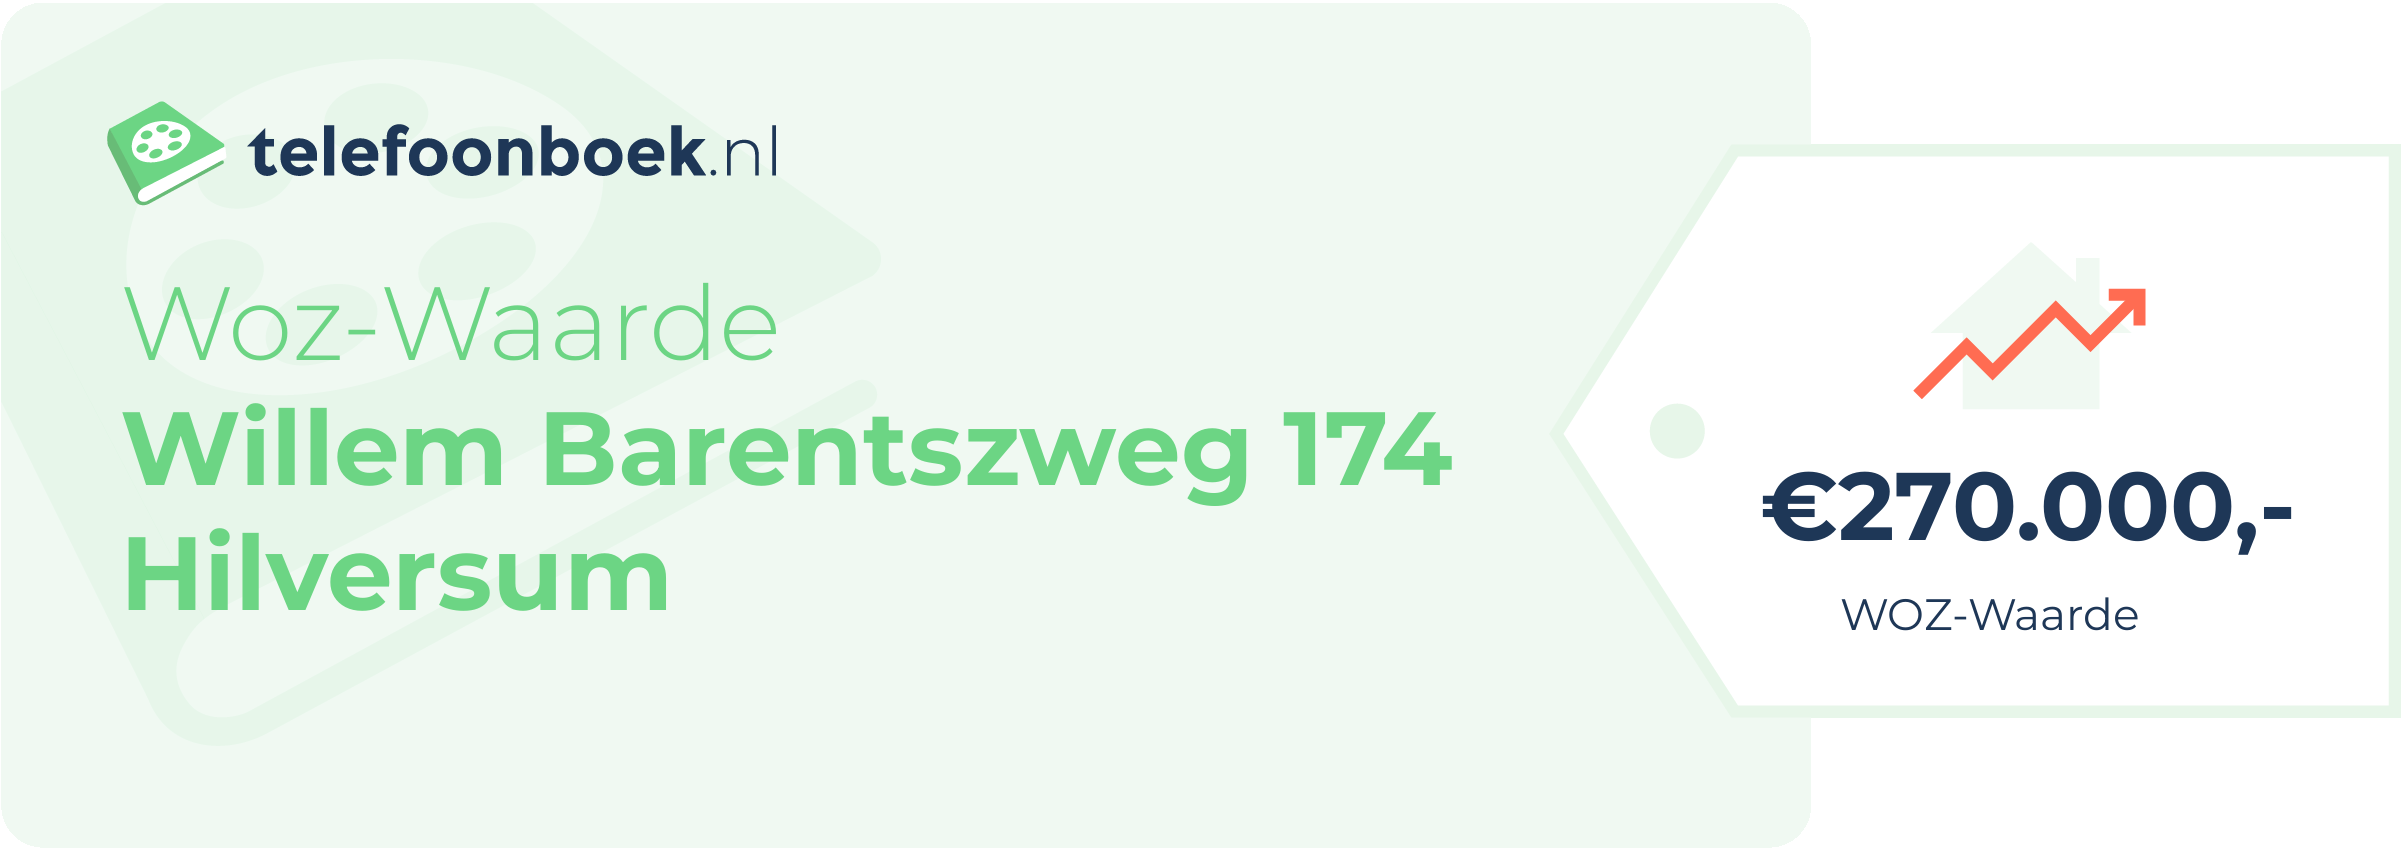 WOZ-waarde Willem Barentszweg 174 Hilversum